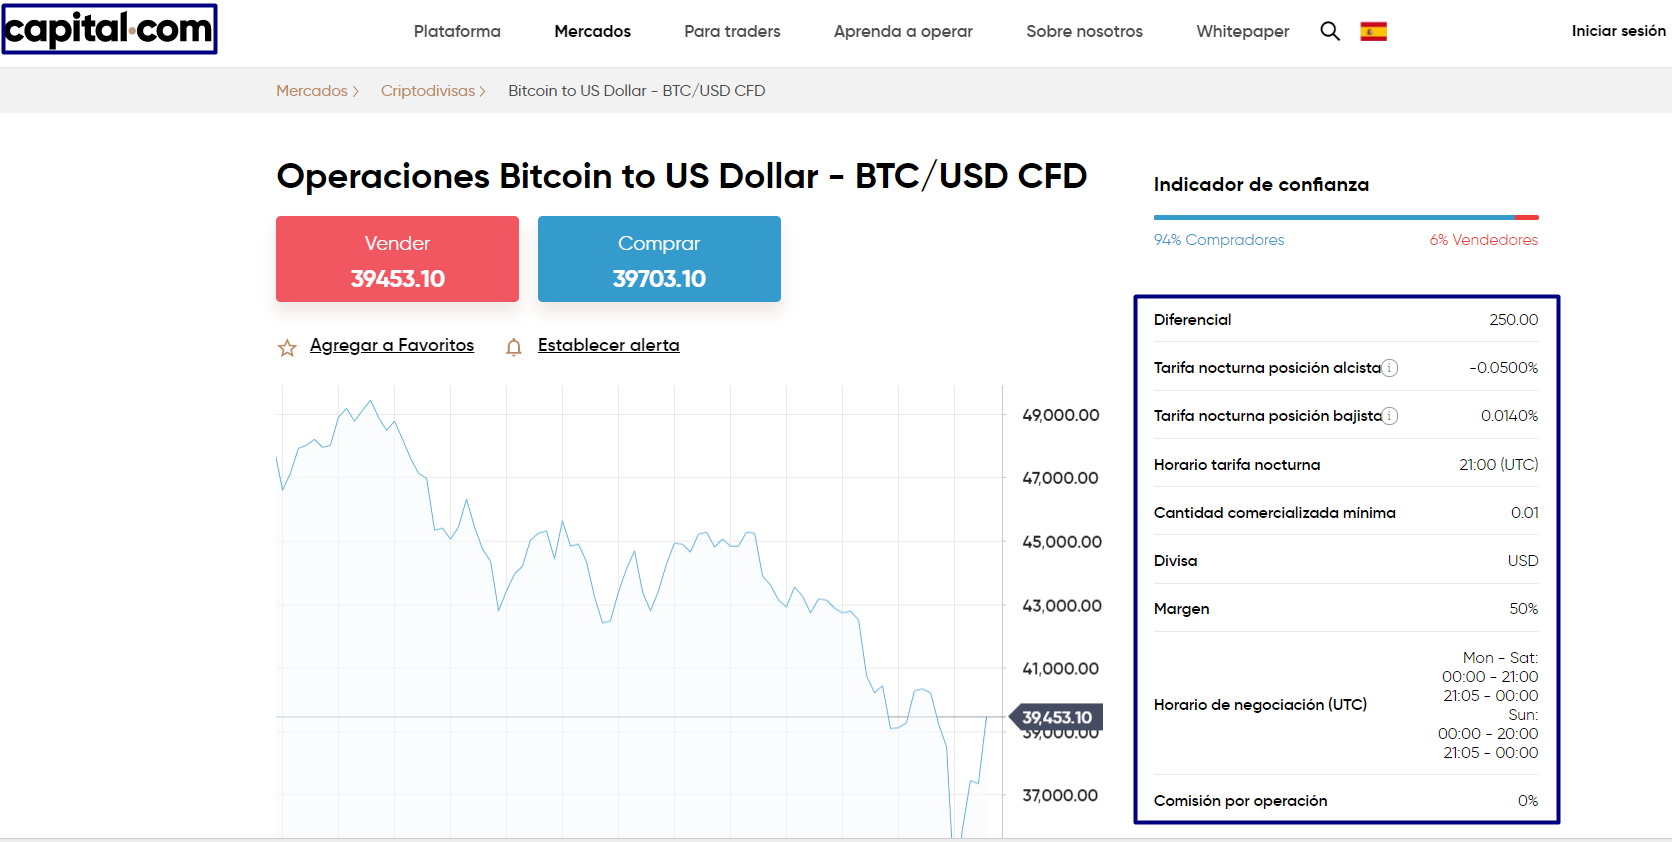 plataforma bitcoin capital.com